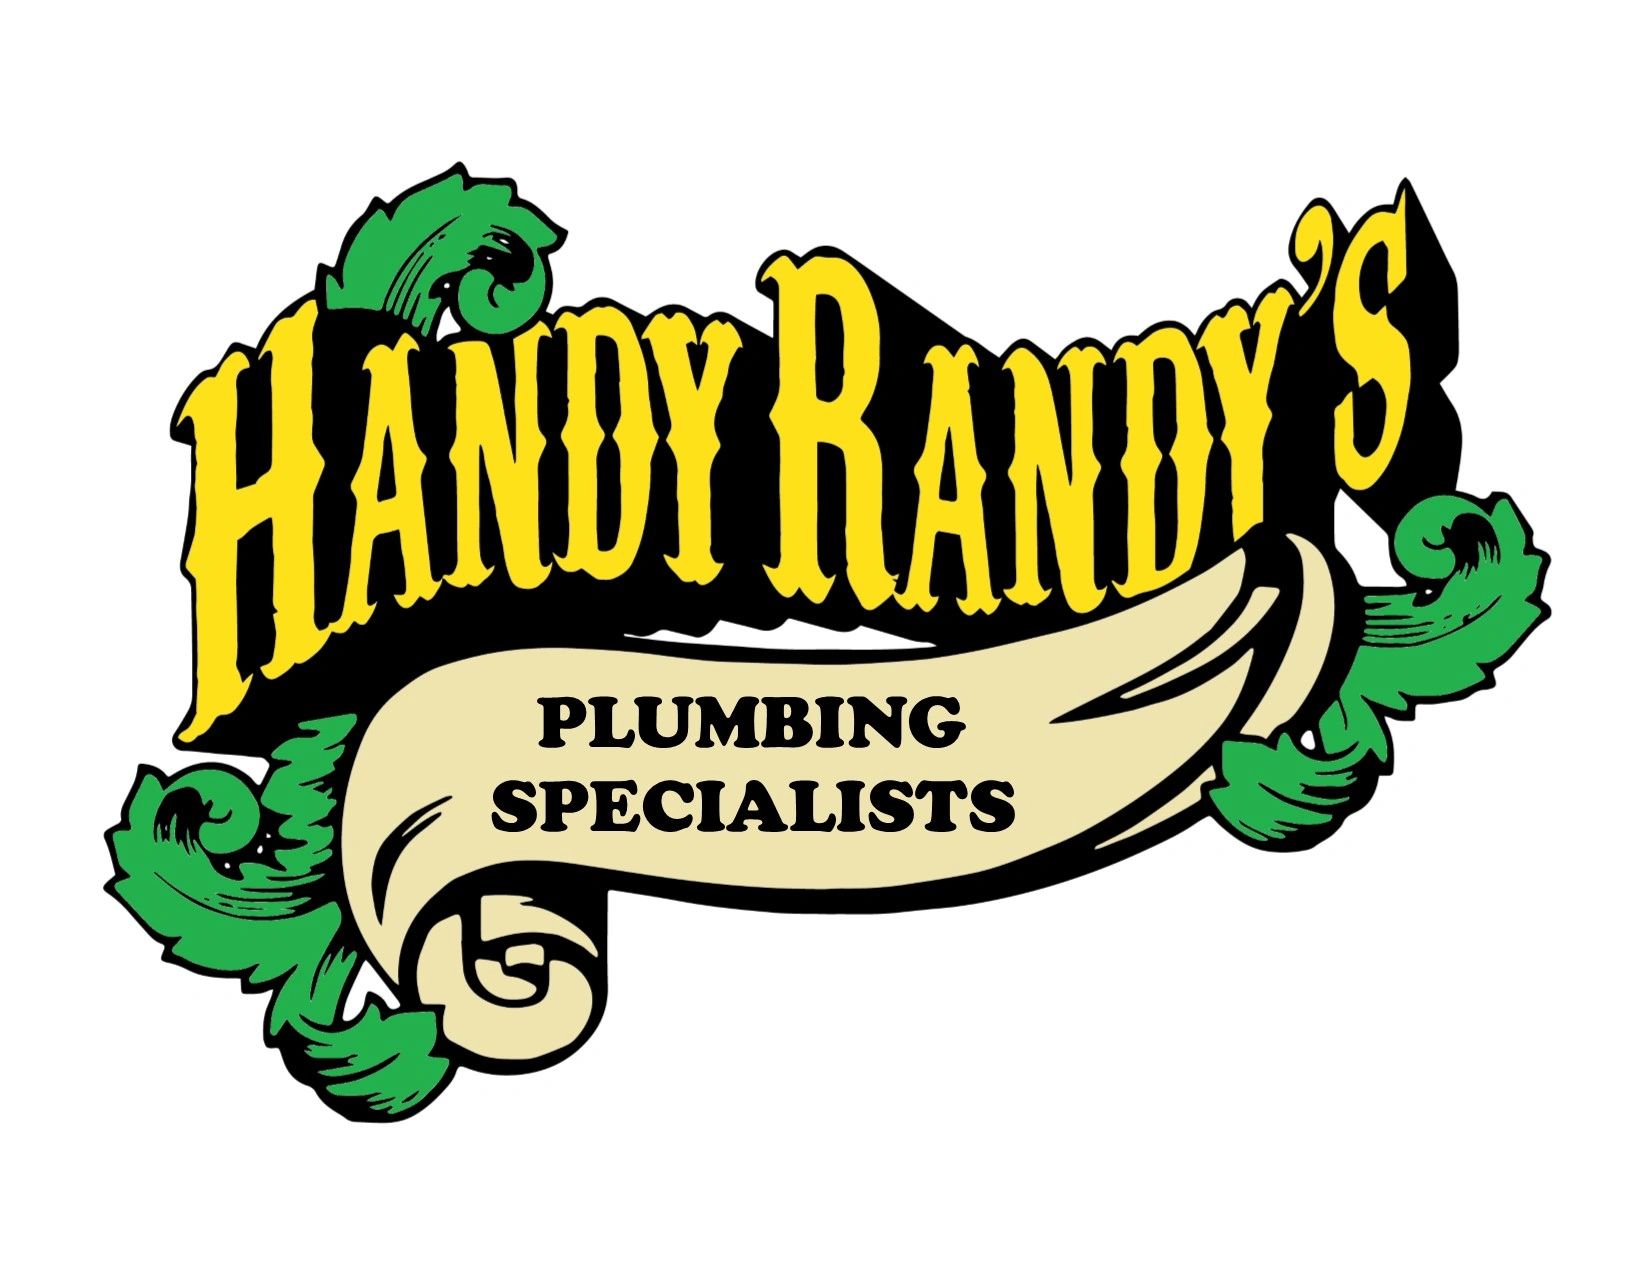 Handy Plumbing Man LLC